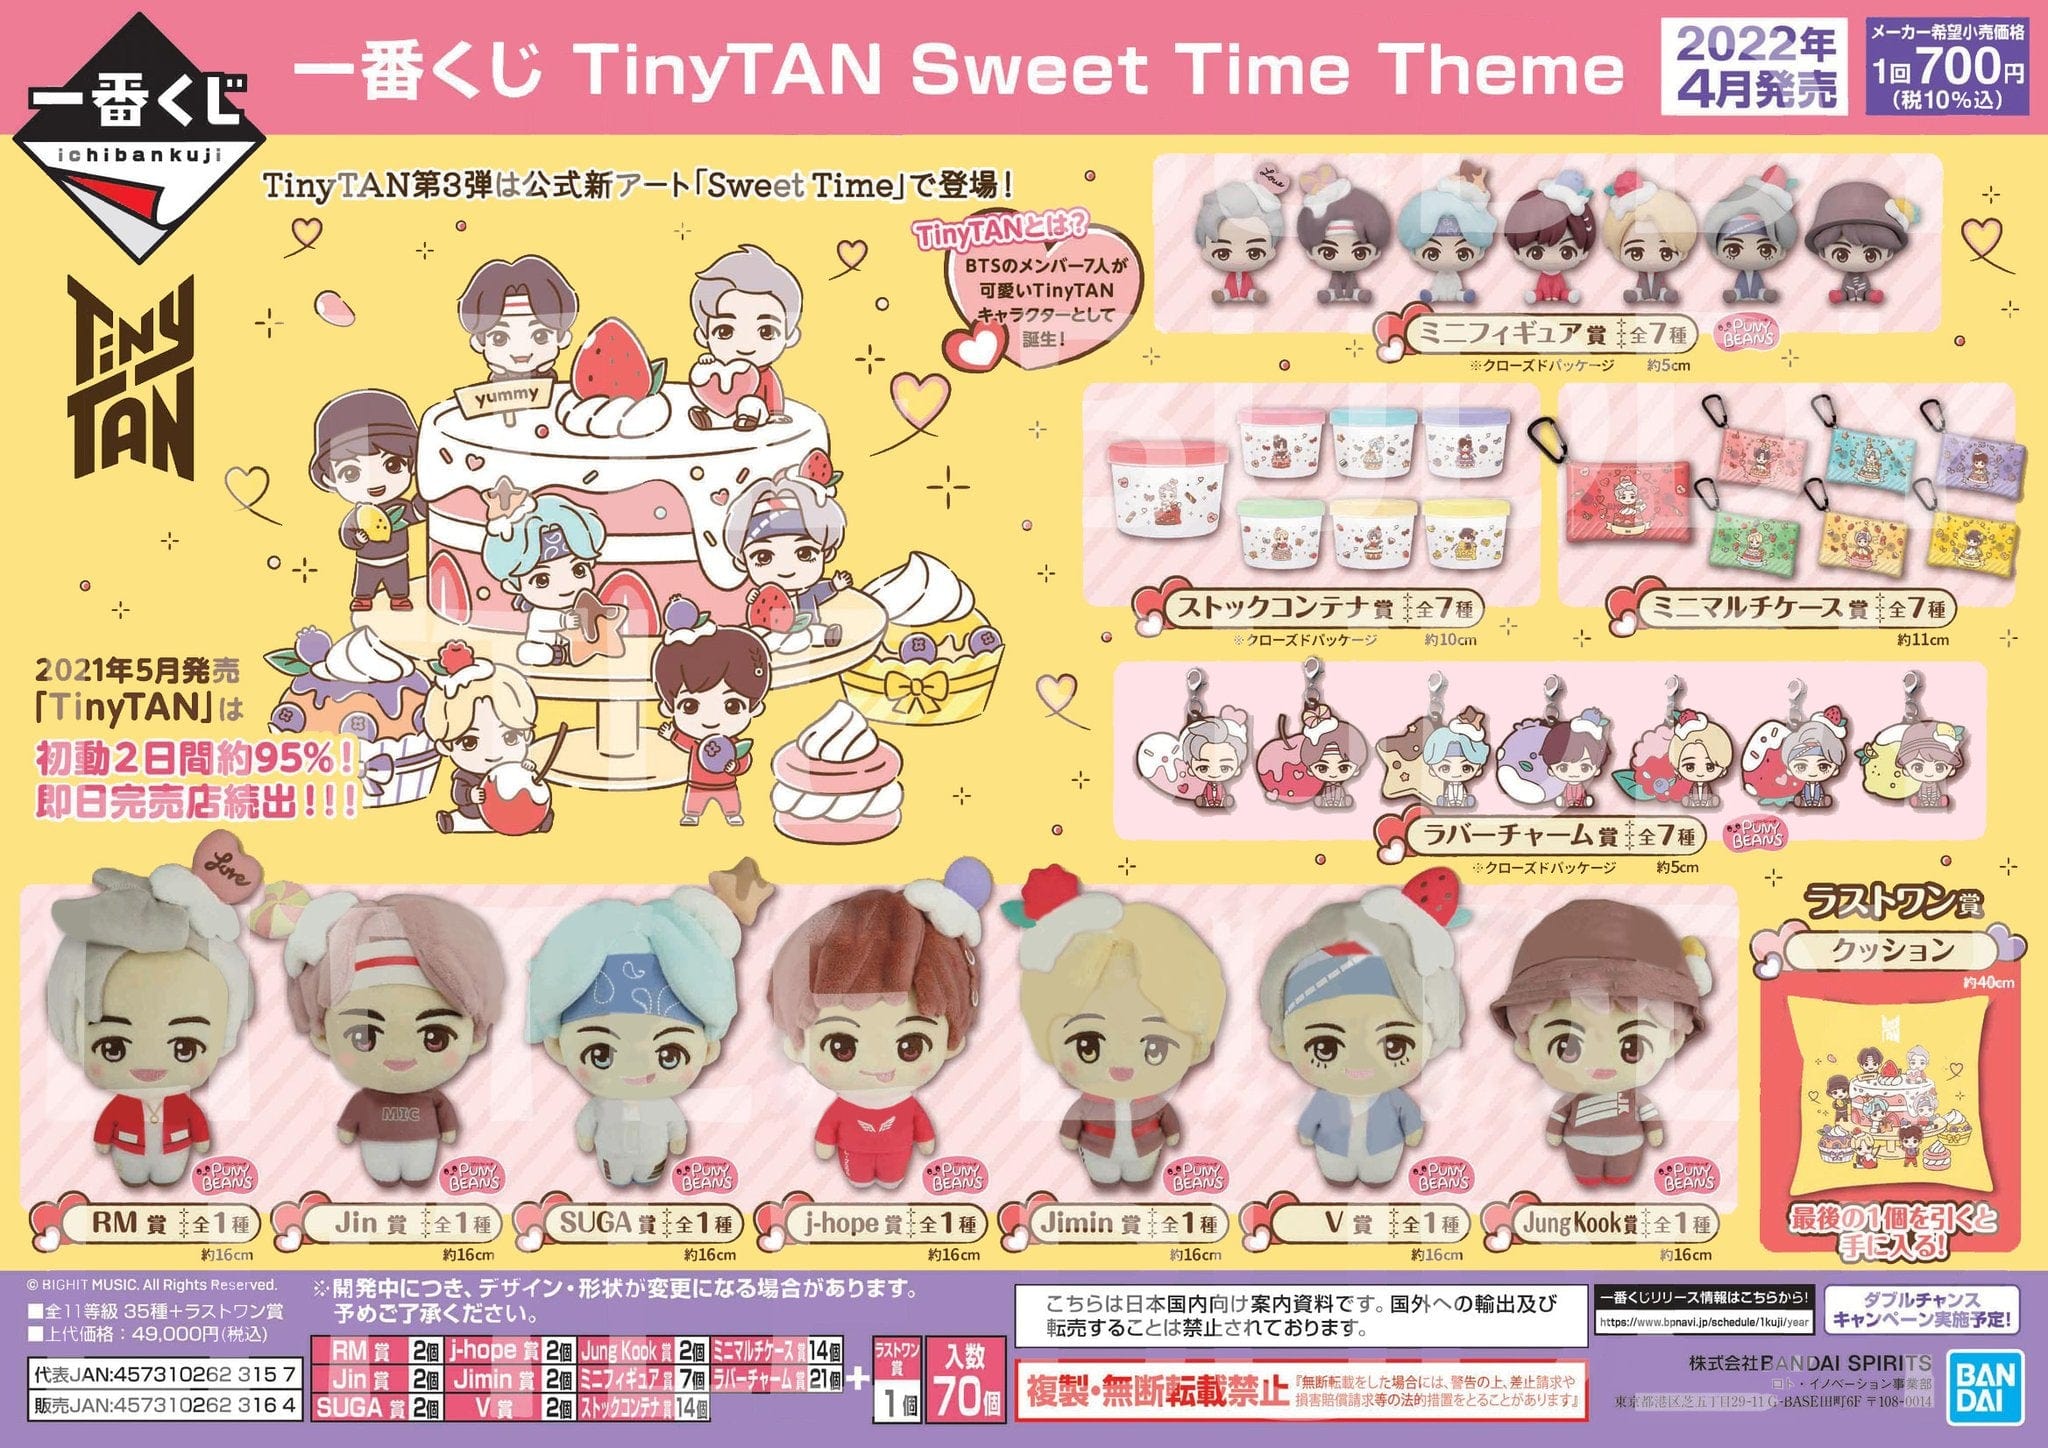 Little Buddy *Ichiban Kuji* Tinytan Sweet Time Theme Kawaii Gifts